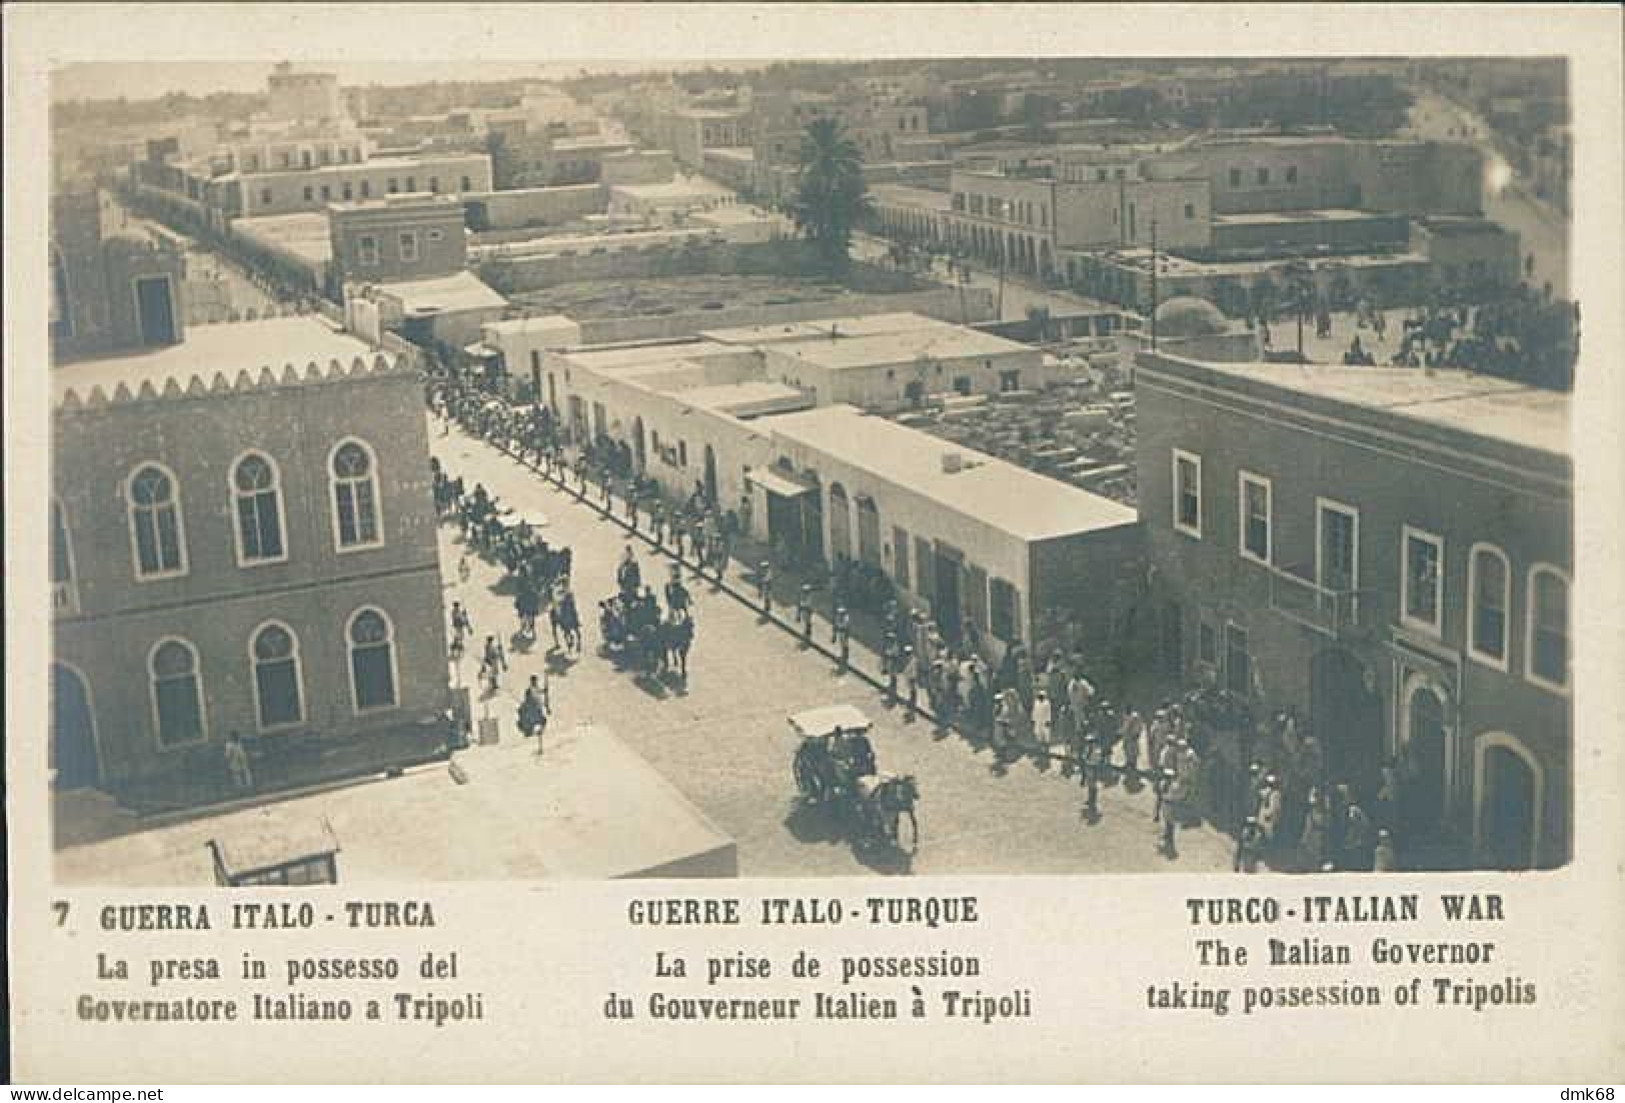 LIBYA / LIBIA - TURKEY / ITALY WAR - ITALIAN GOVERNOR TAKING POSSESSION OF TRIPOLI - RPPC POSTCARD 1910s (12595) - Libyen